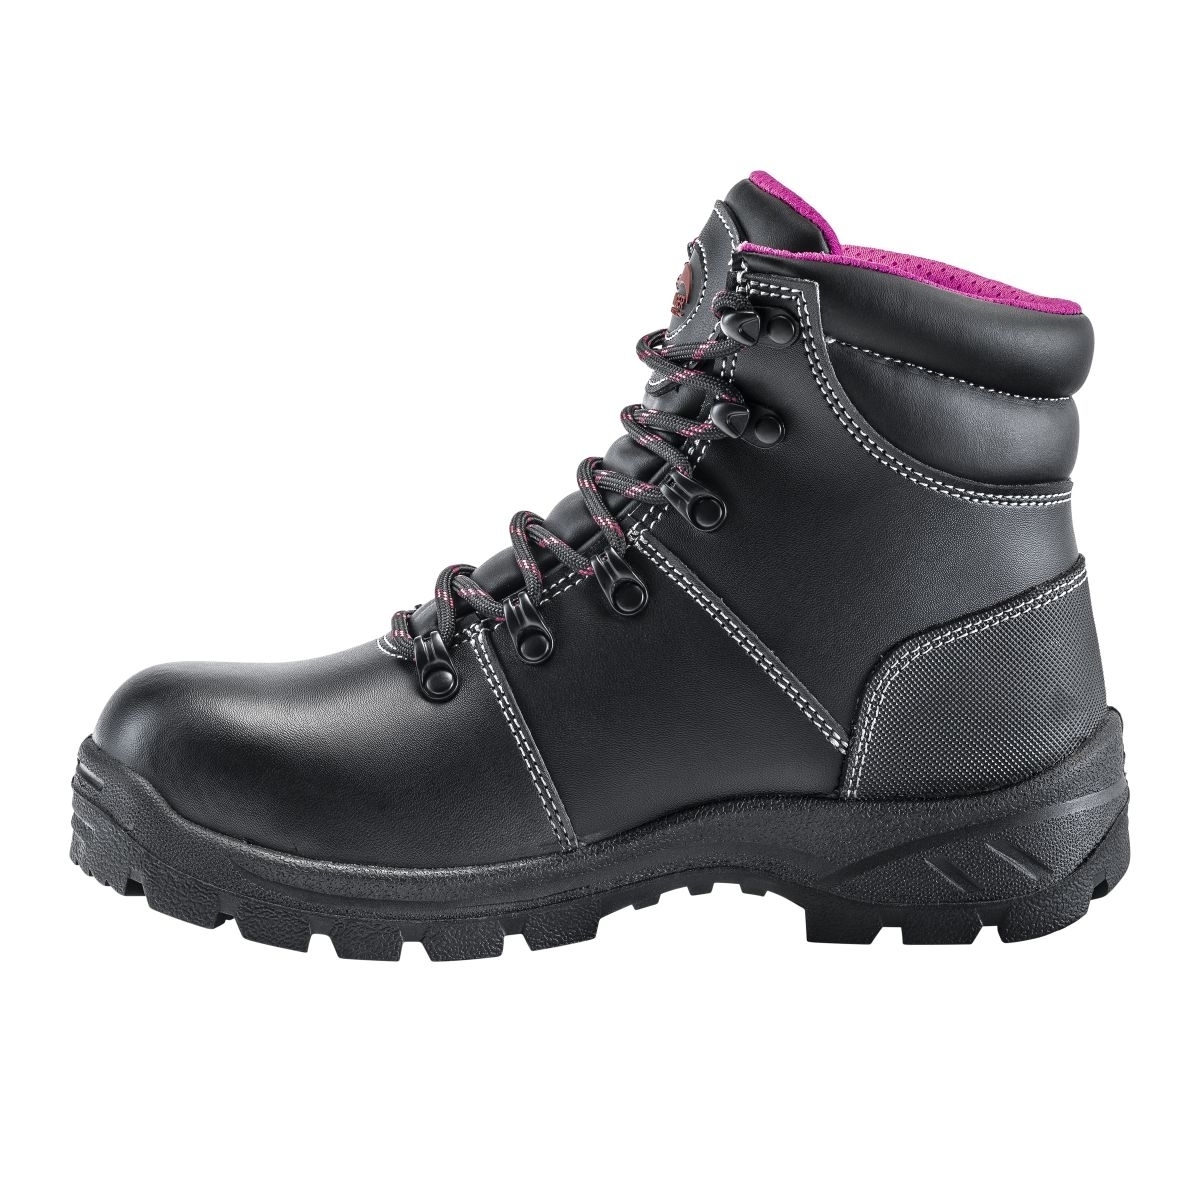 FSI FOOTWEAR SPECIALTIES INTERNATIONAL NAUTILUS Avenger Women's Builder Mid Soft Toe Waterproof Work Boots Black/Pink - A8674 BLACK/PINK - B